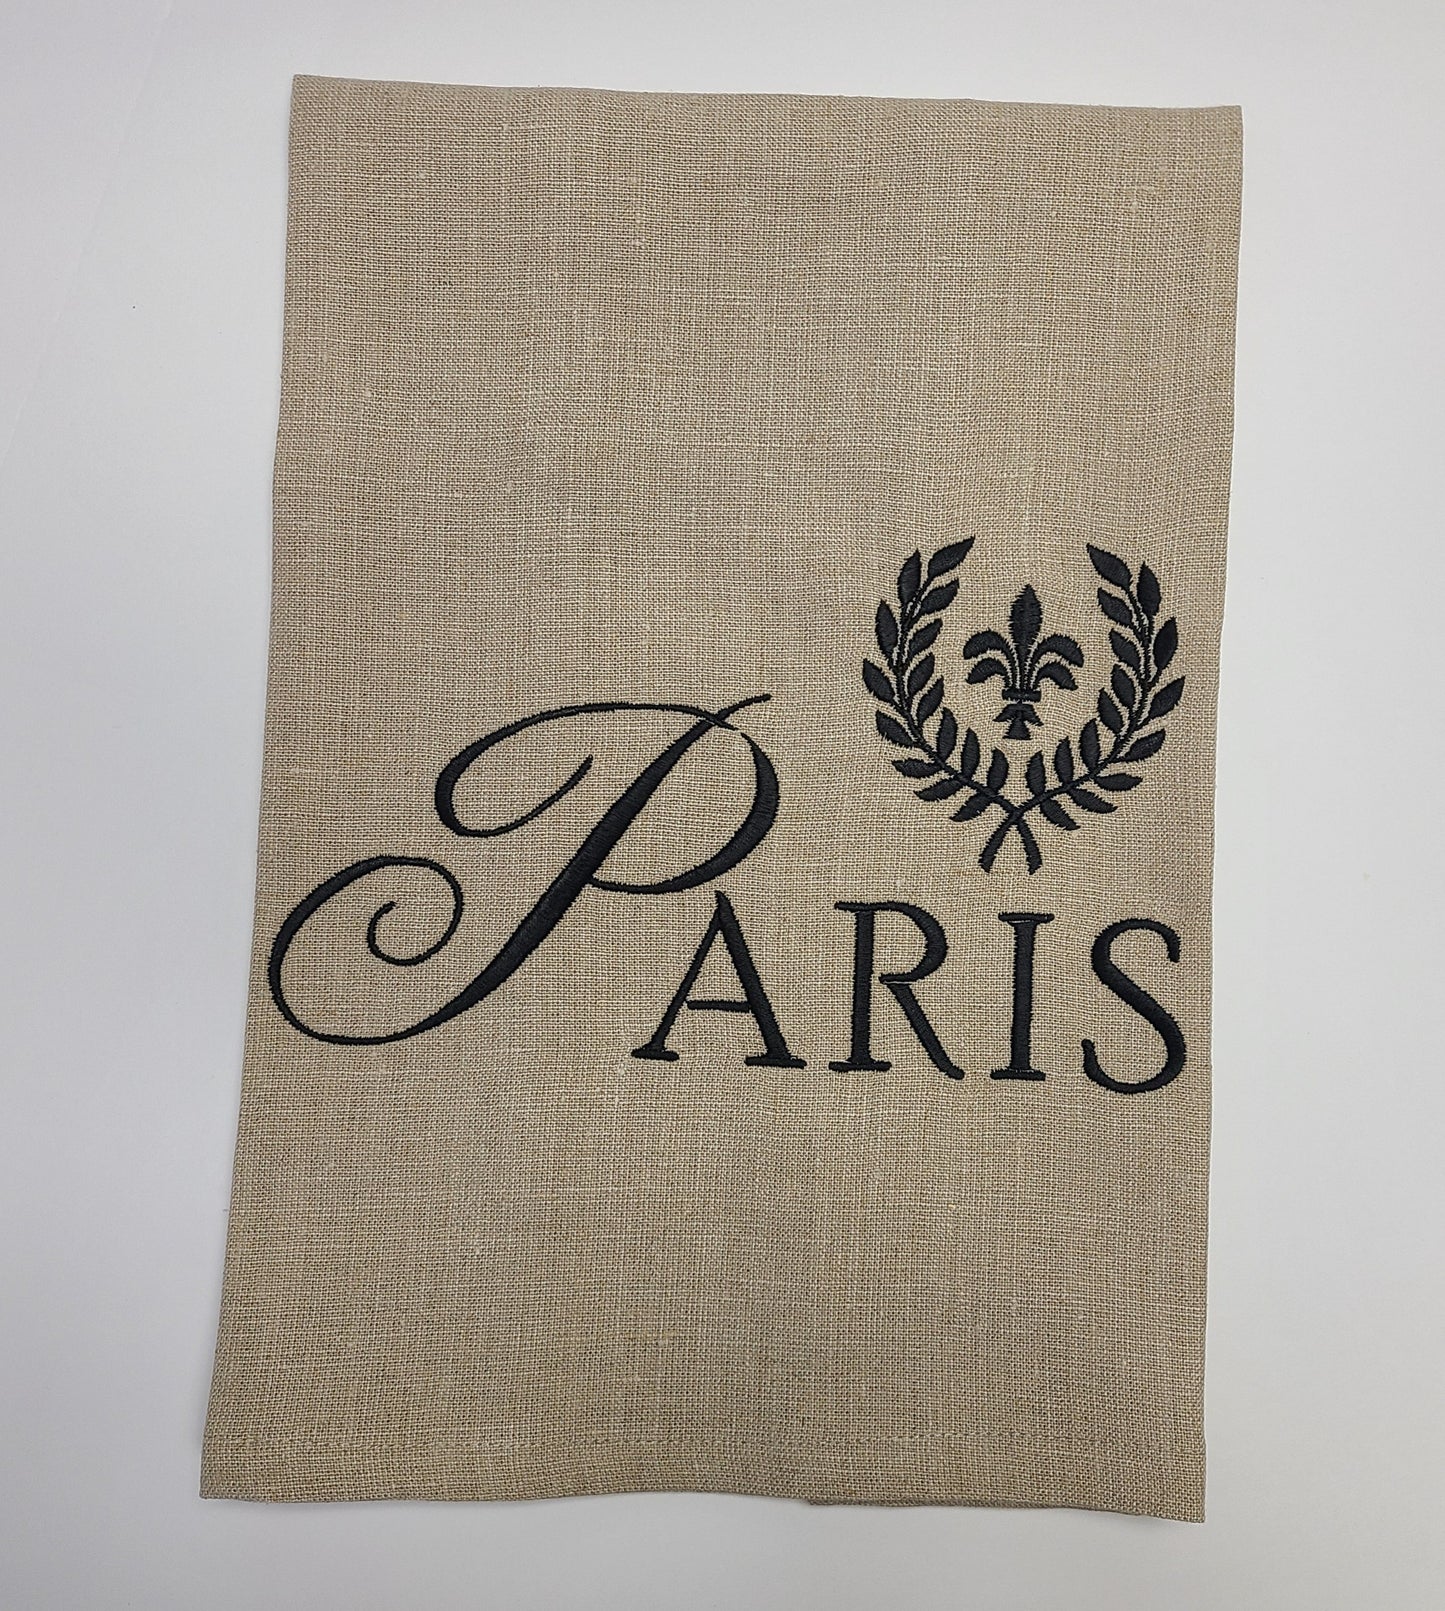 Paris with Laurel/FDL Linen Tea Towel